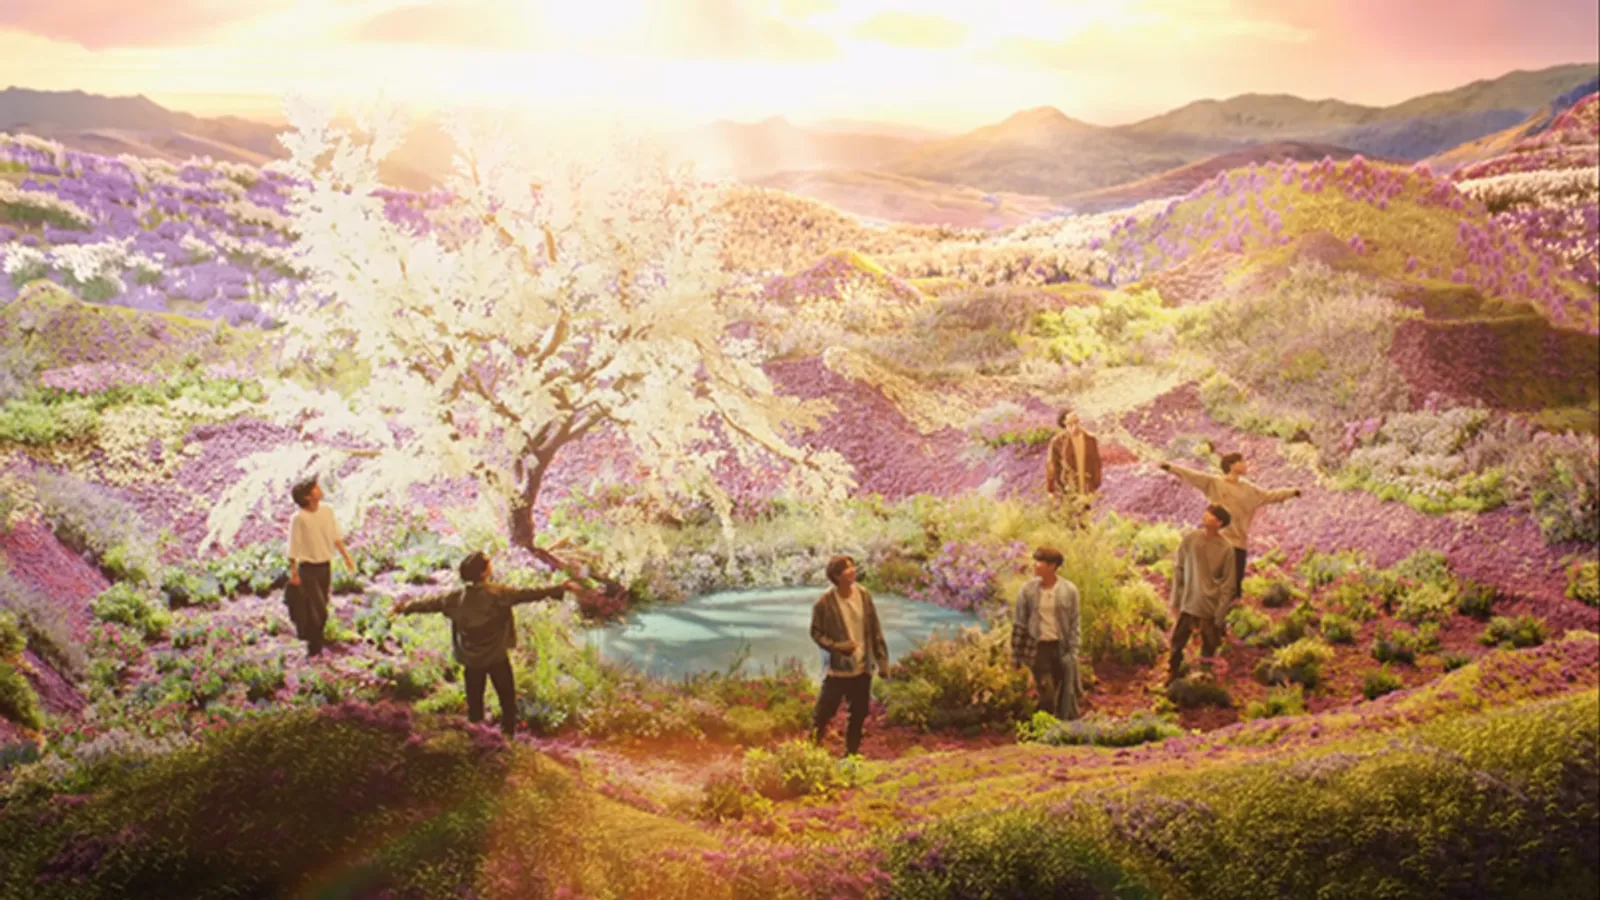 Bukan Efek CGI, 7 Kualitas Lokasi Syuting BTS "Stay Gold" Menakjubkan